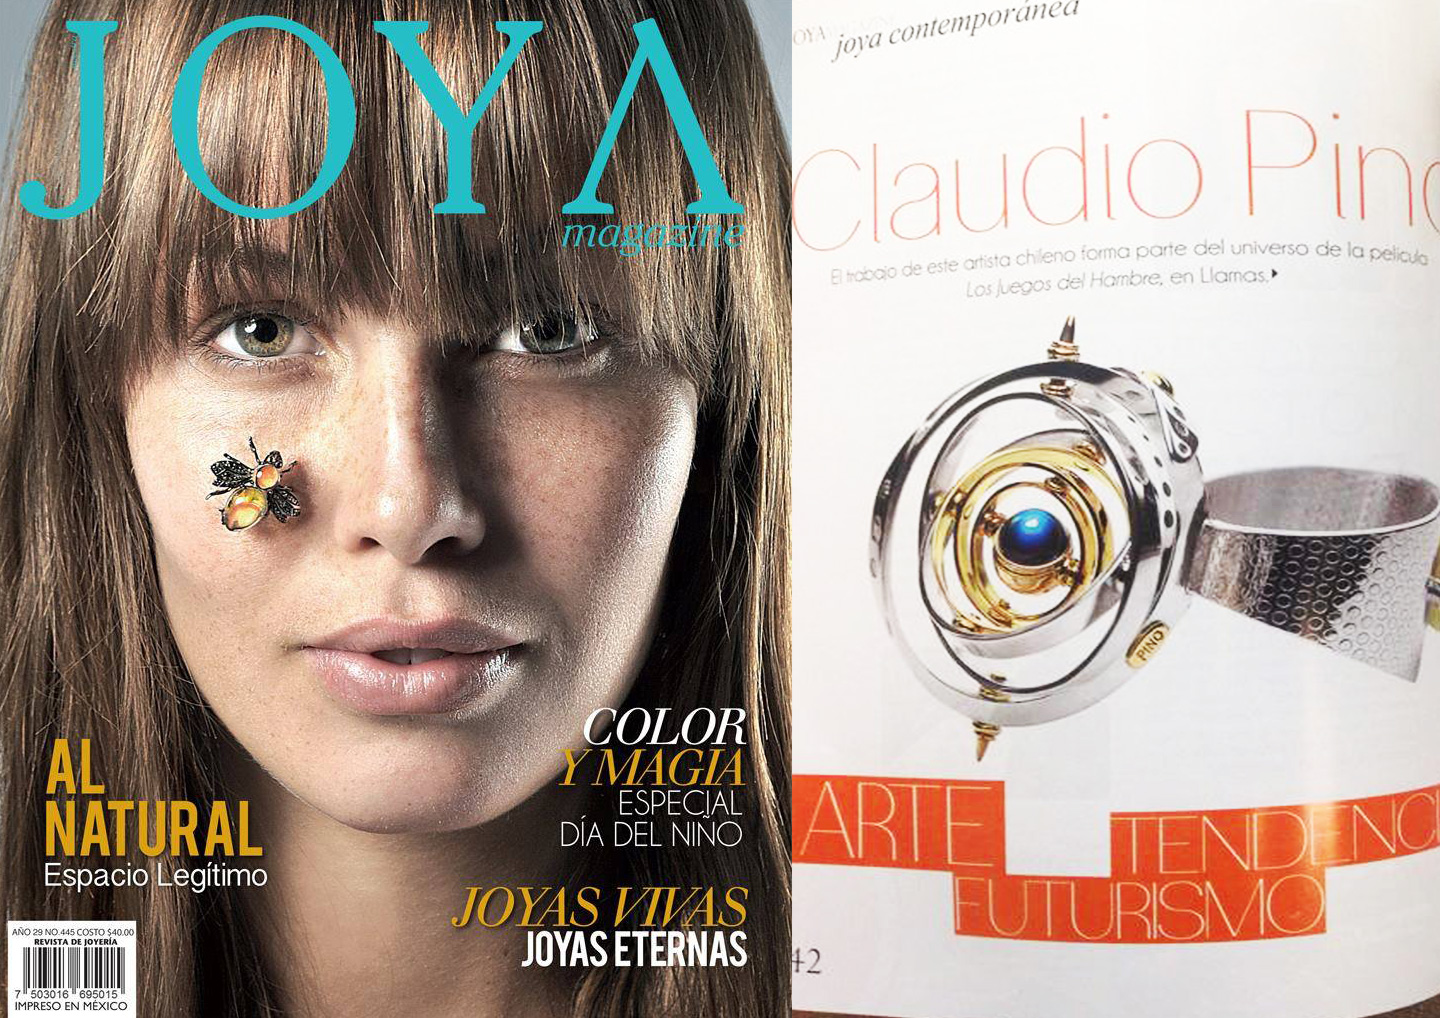 JOYA Magazine "Claudio Pino" By Damian Pineda JOYA Magazine, April 2014, Mexico pp. 109-115